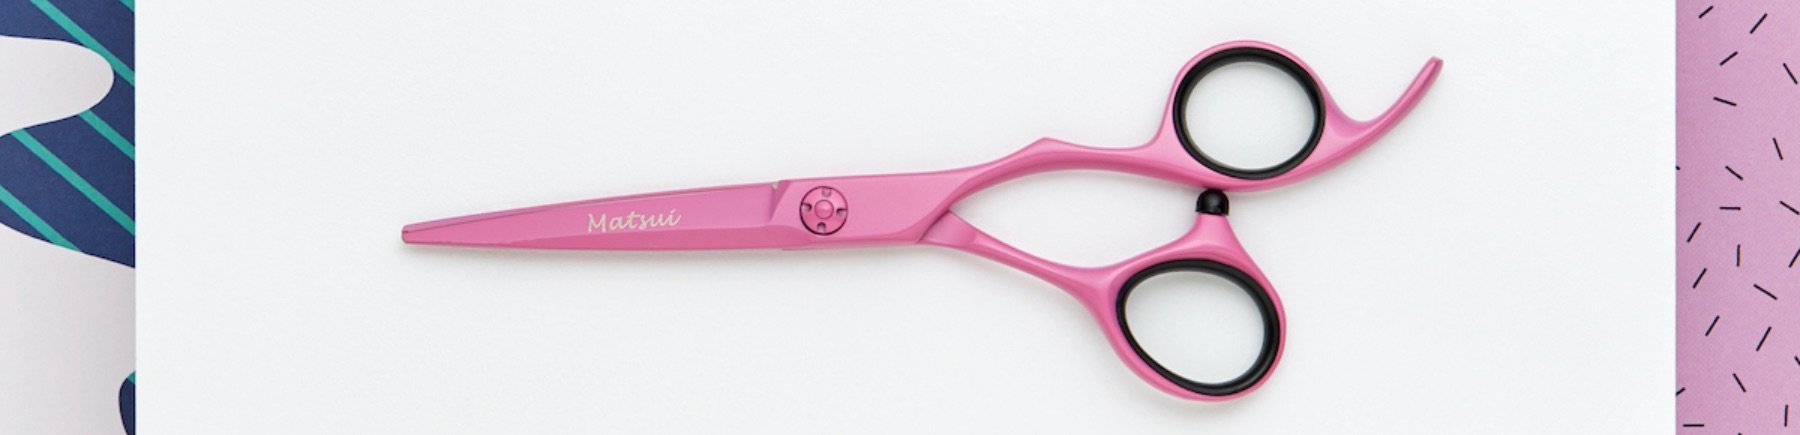 Pink Hairdressing Scissors.